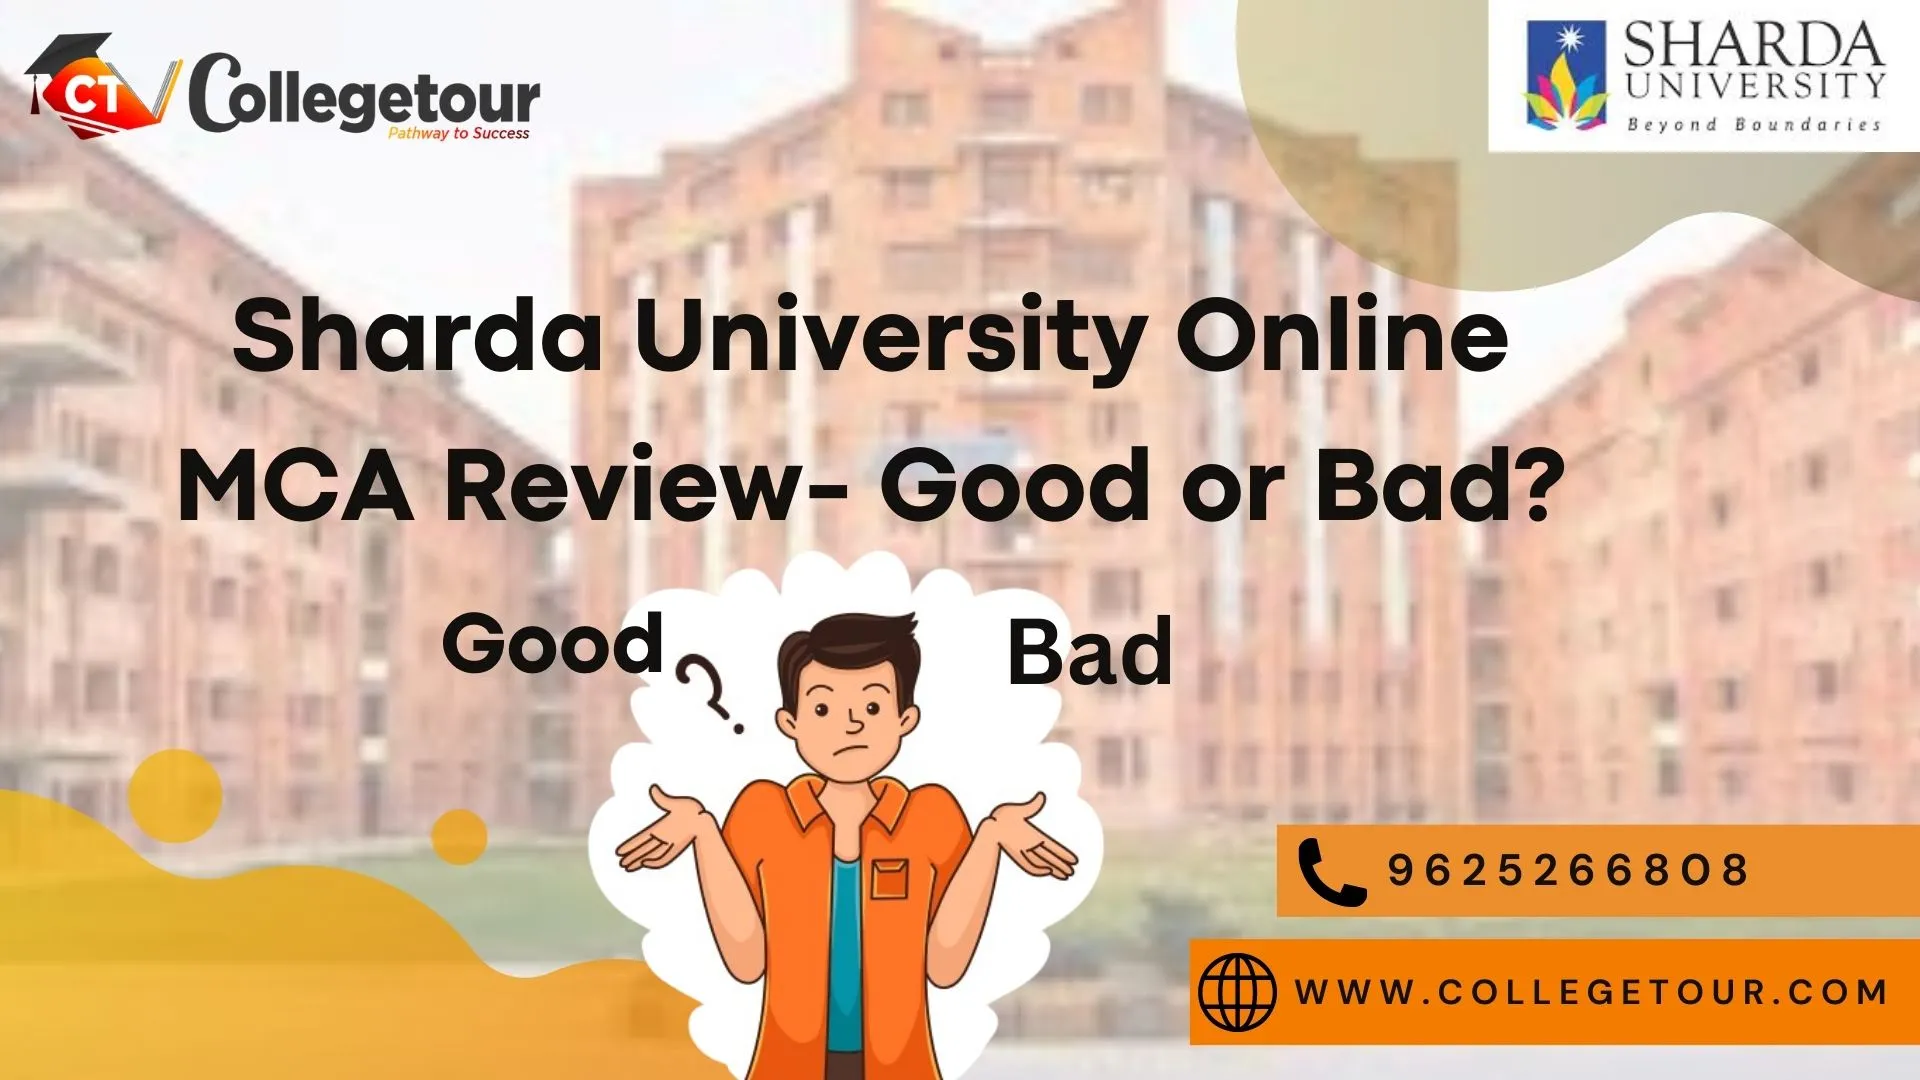 Sharda University Online MCA Review- Good or Bad?